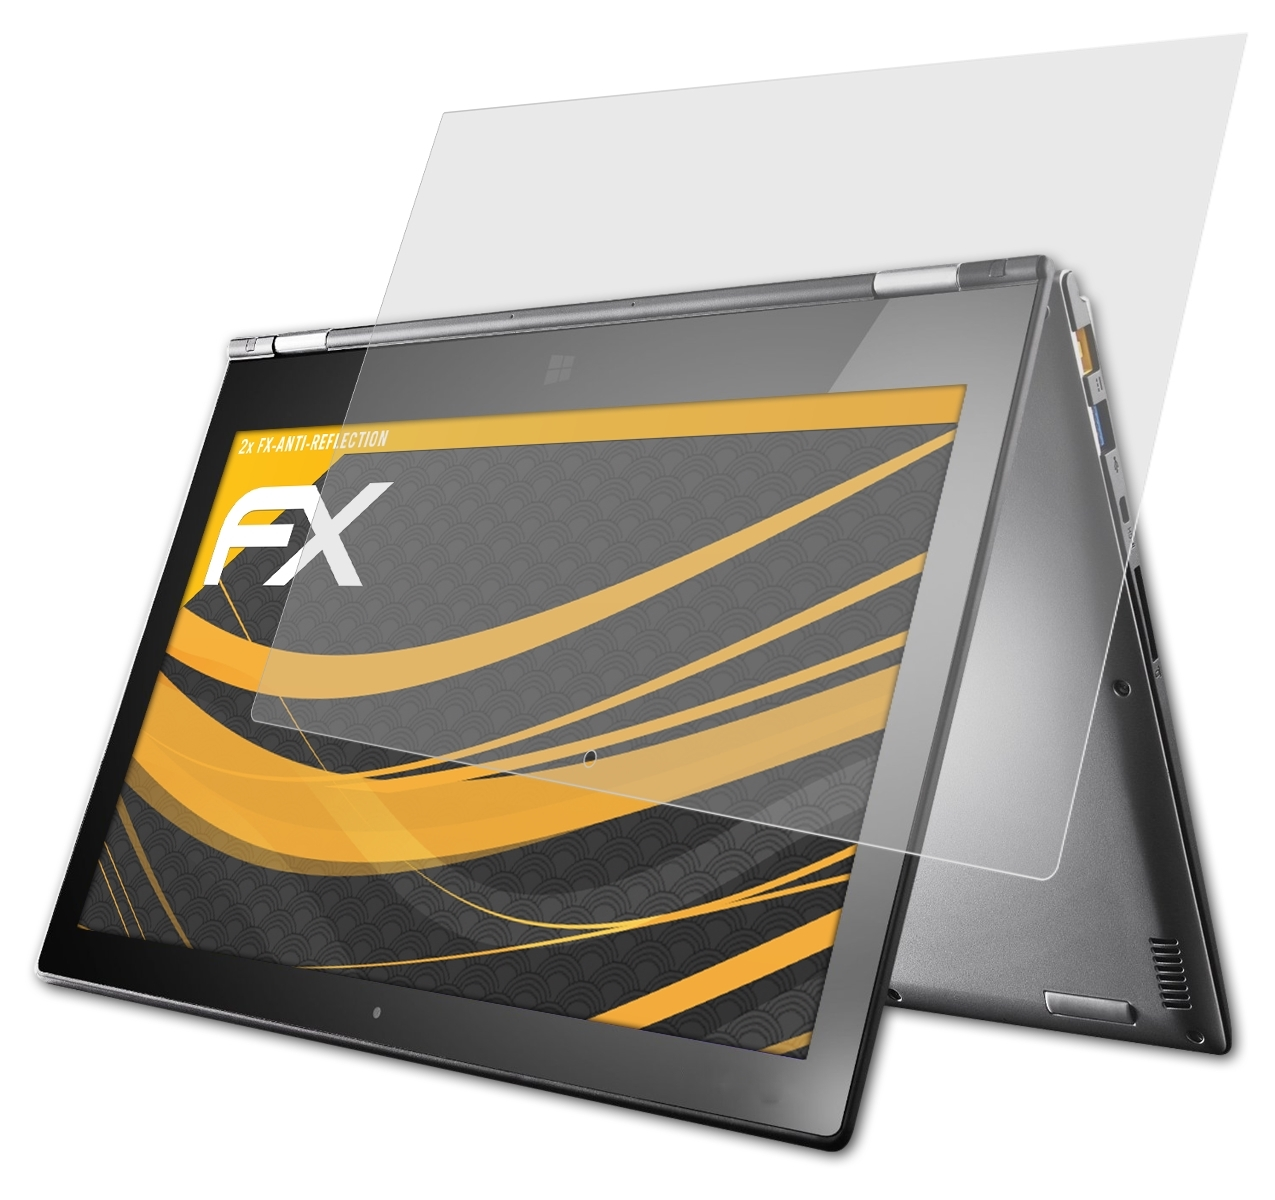 ATFOLIX 2 2x Displayschutz(für (13.3 FX-Antireflex Yoga IdeaPad Lenovo inch)) Pro